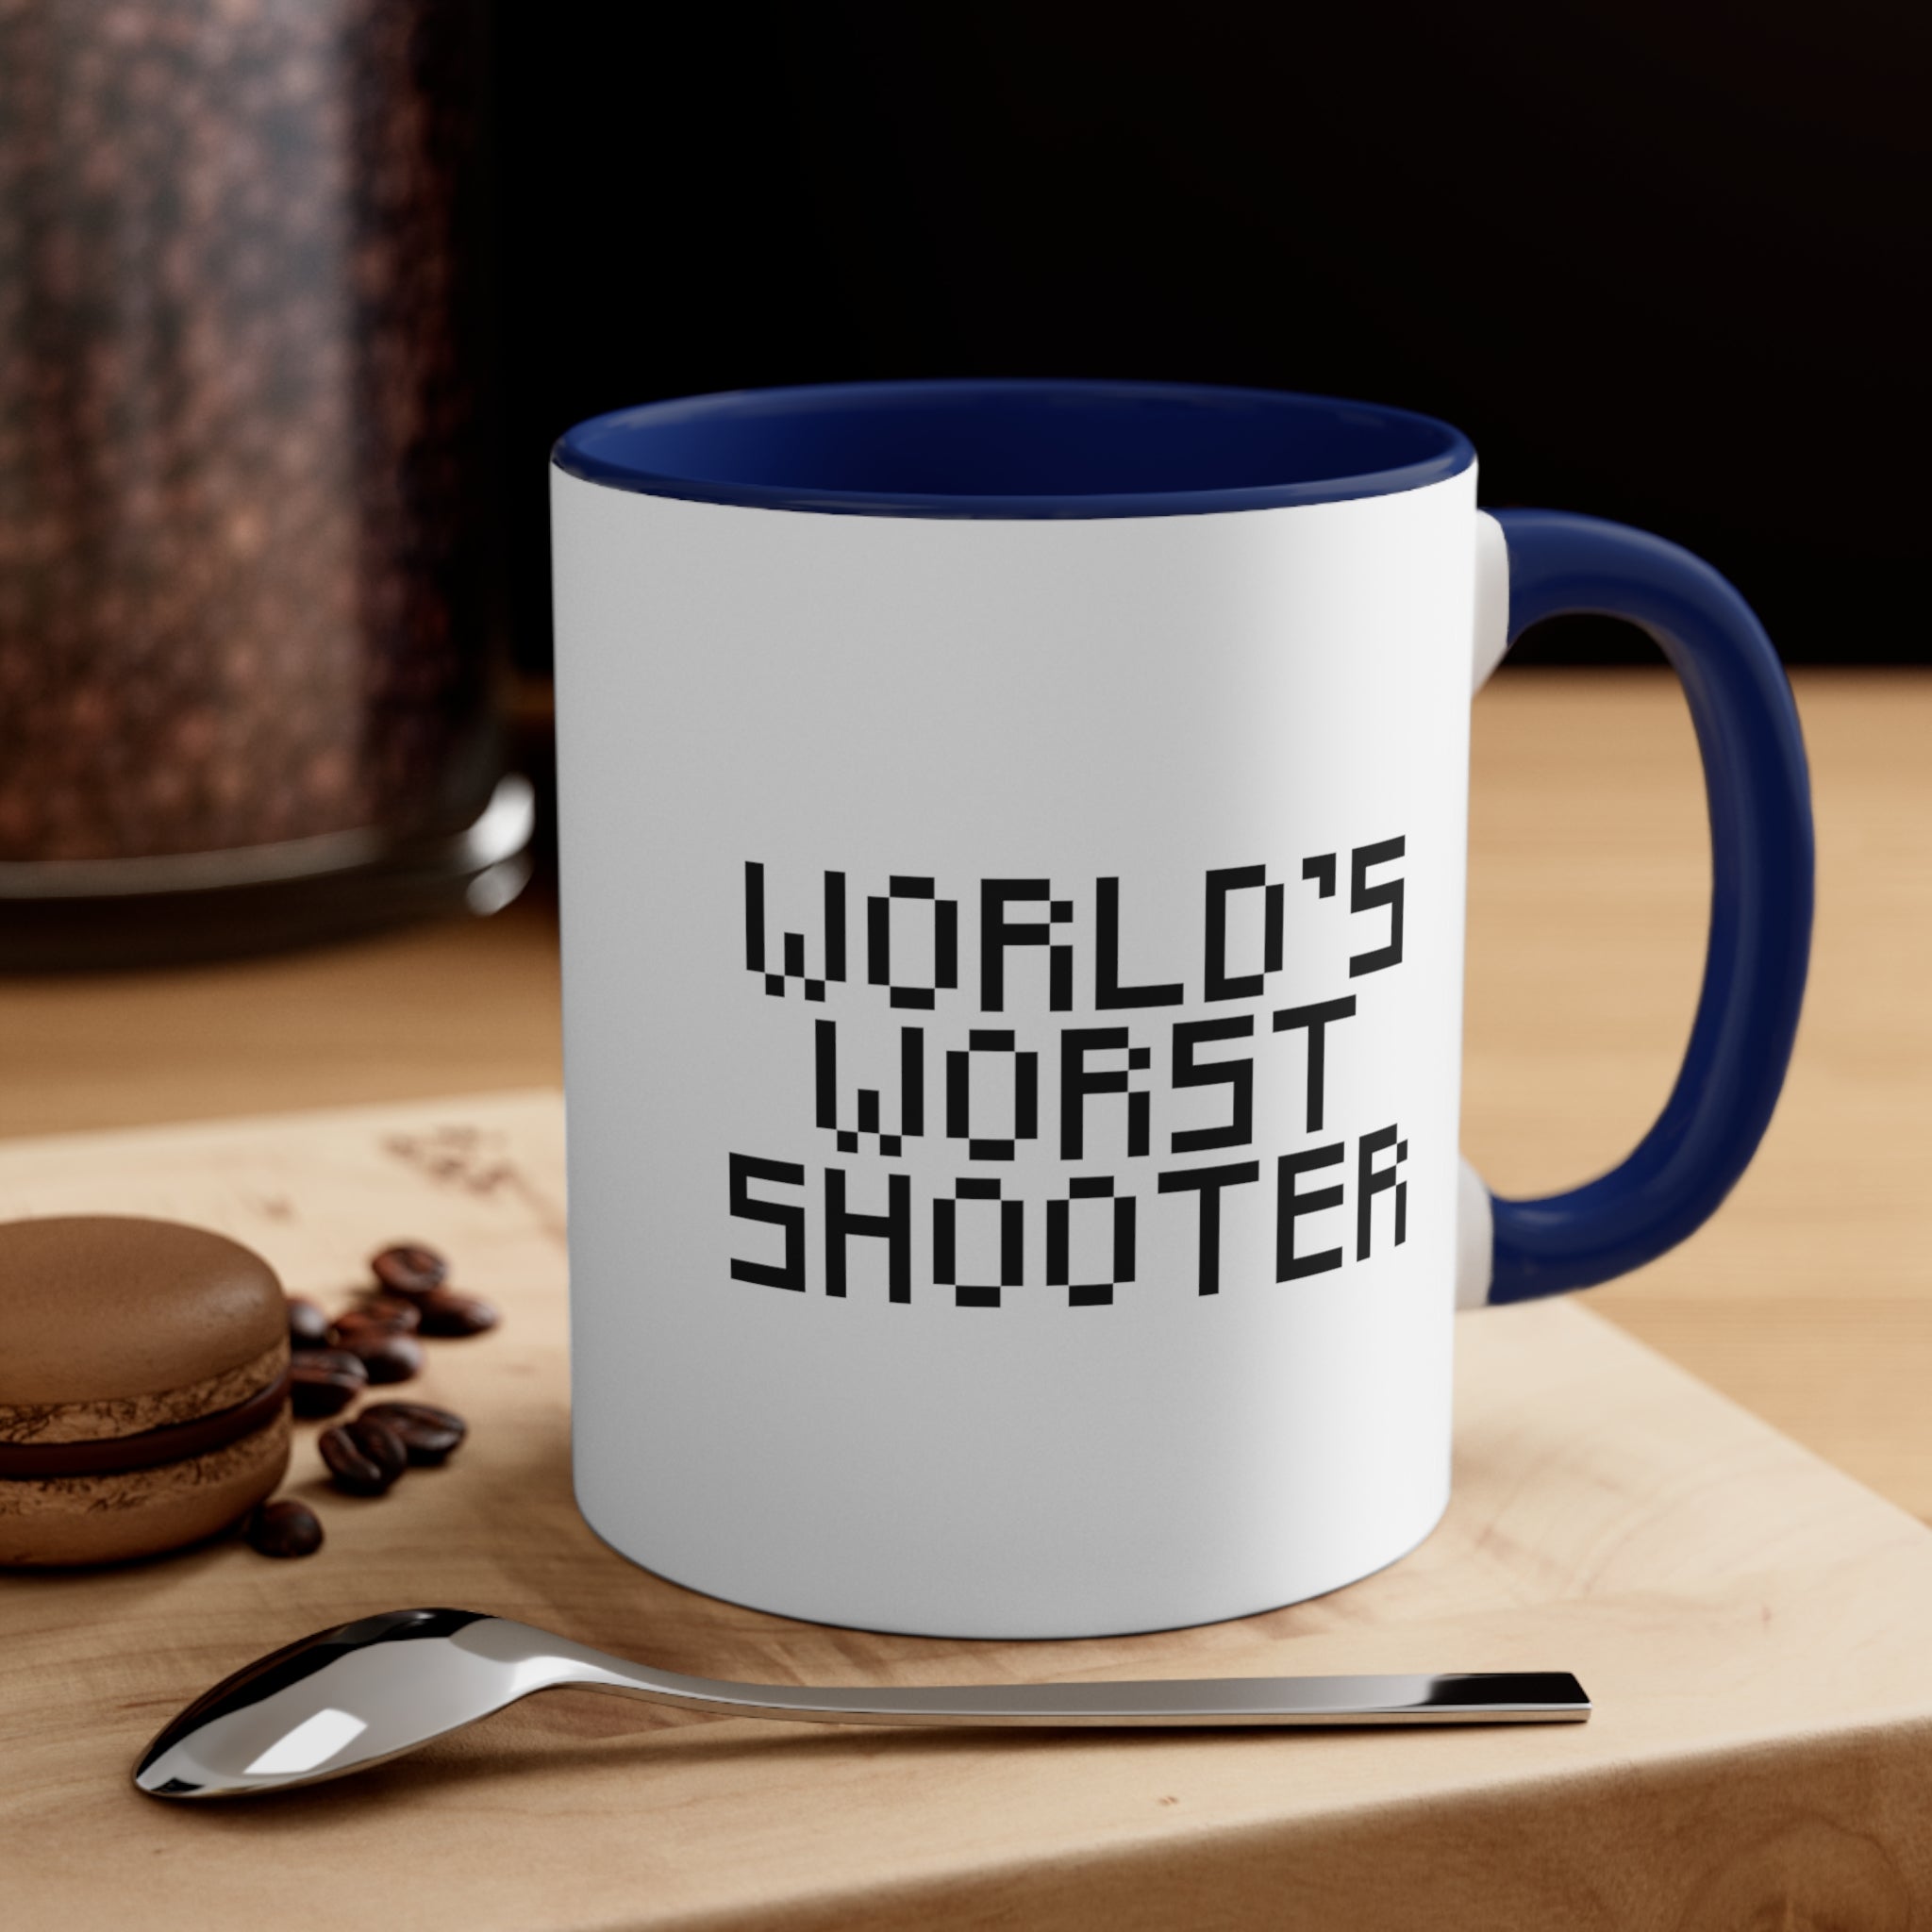 World's Worst Shooter Accent Coffee Mug, 11oz